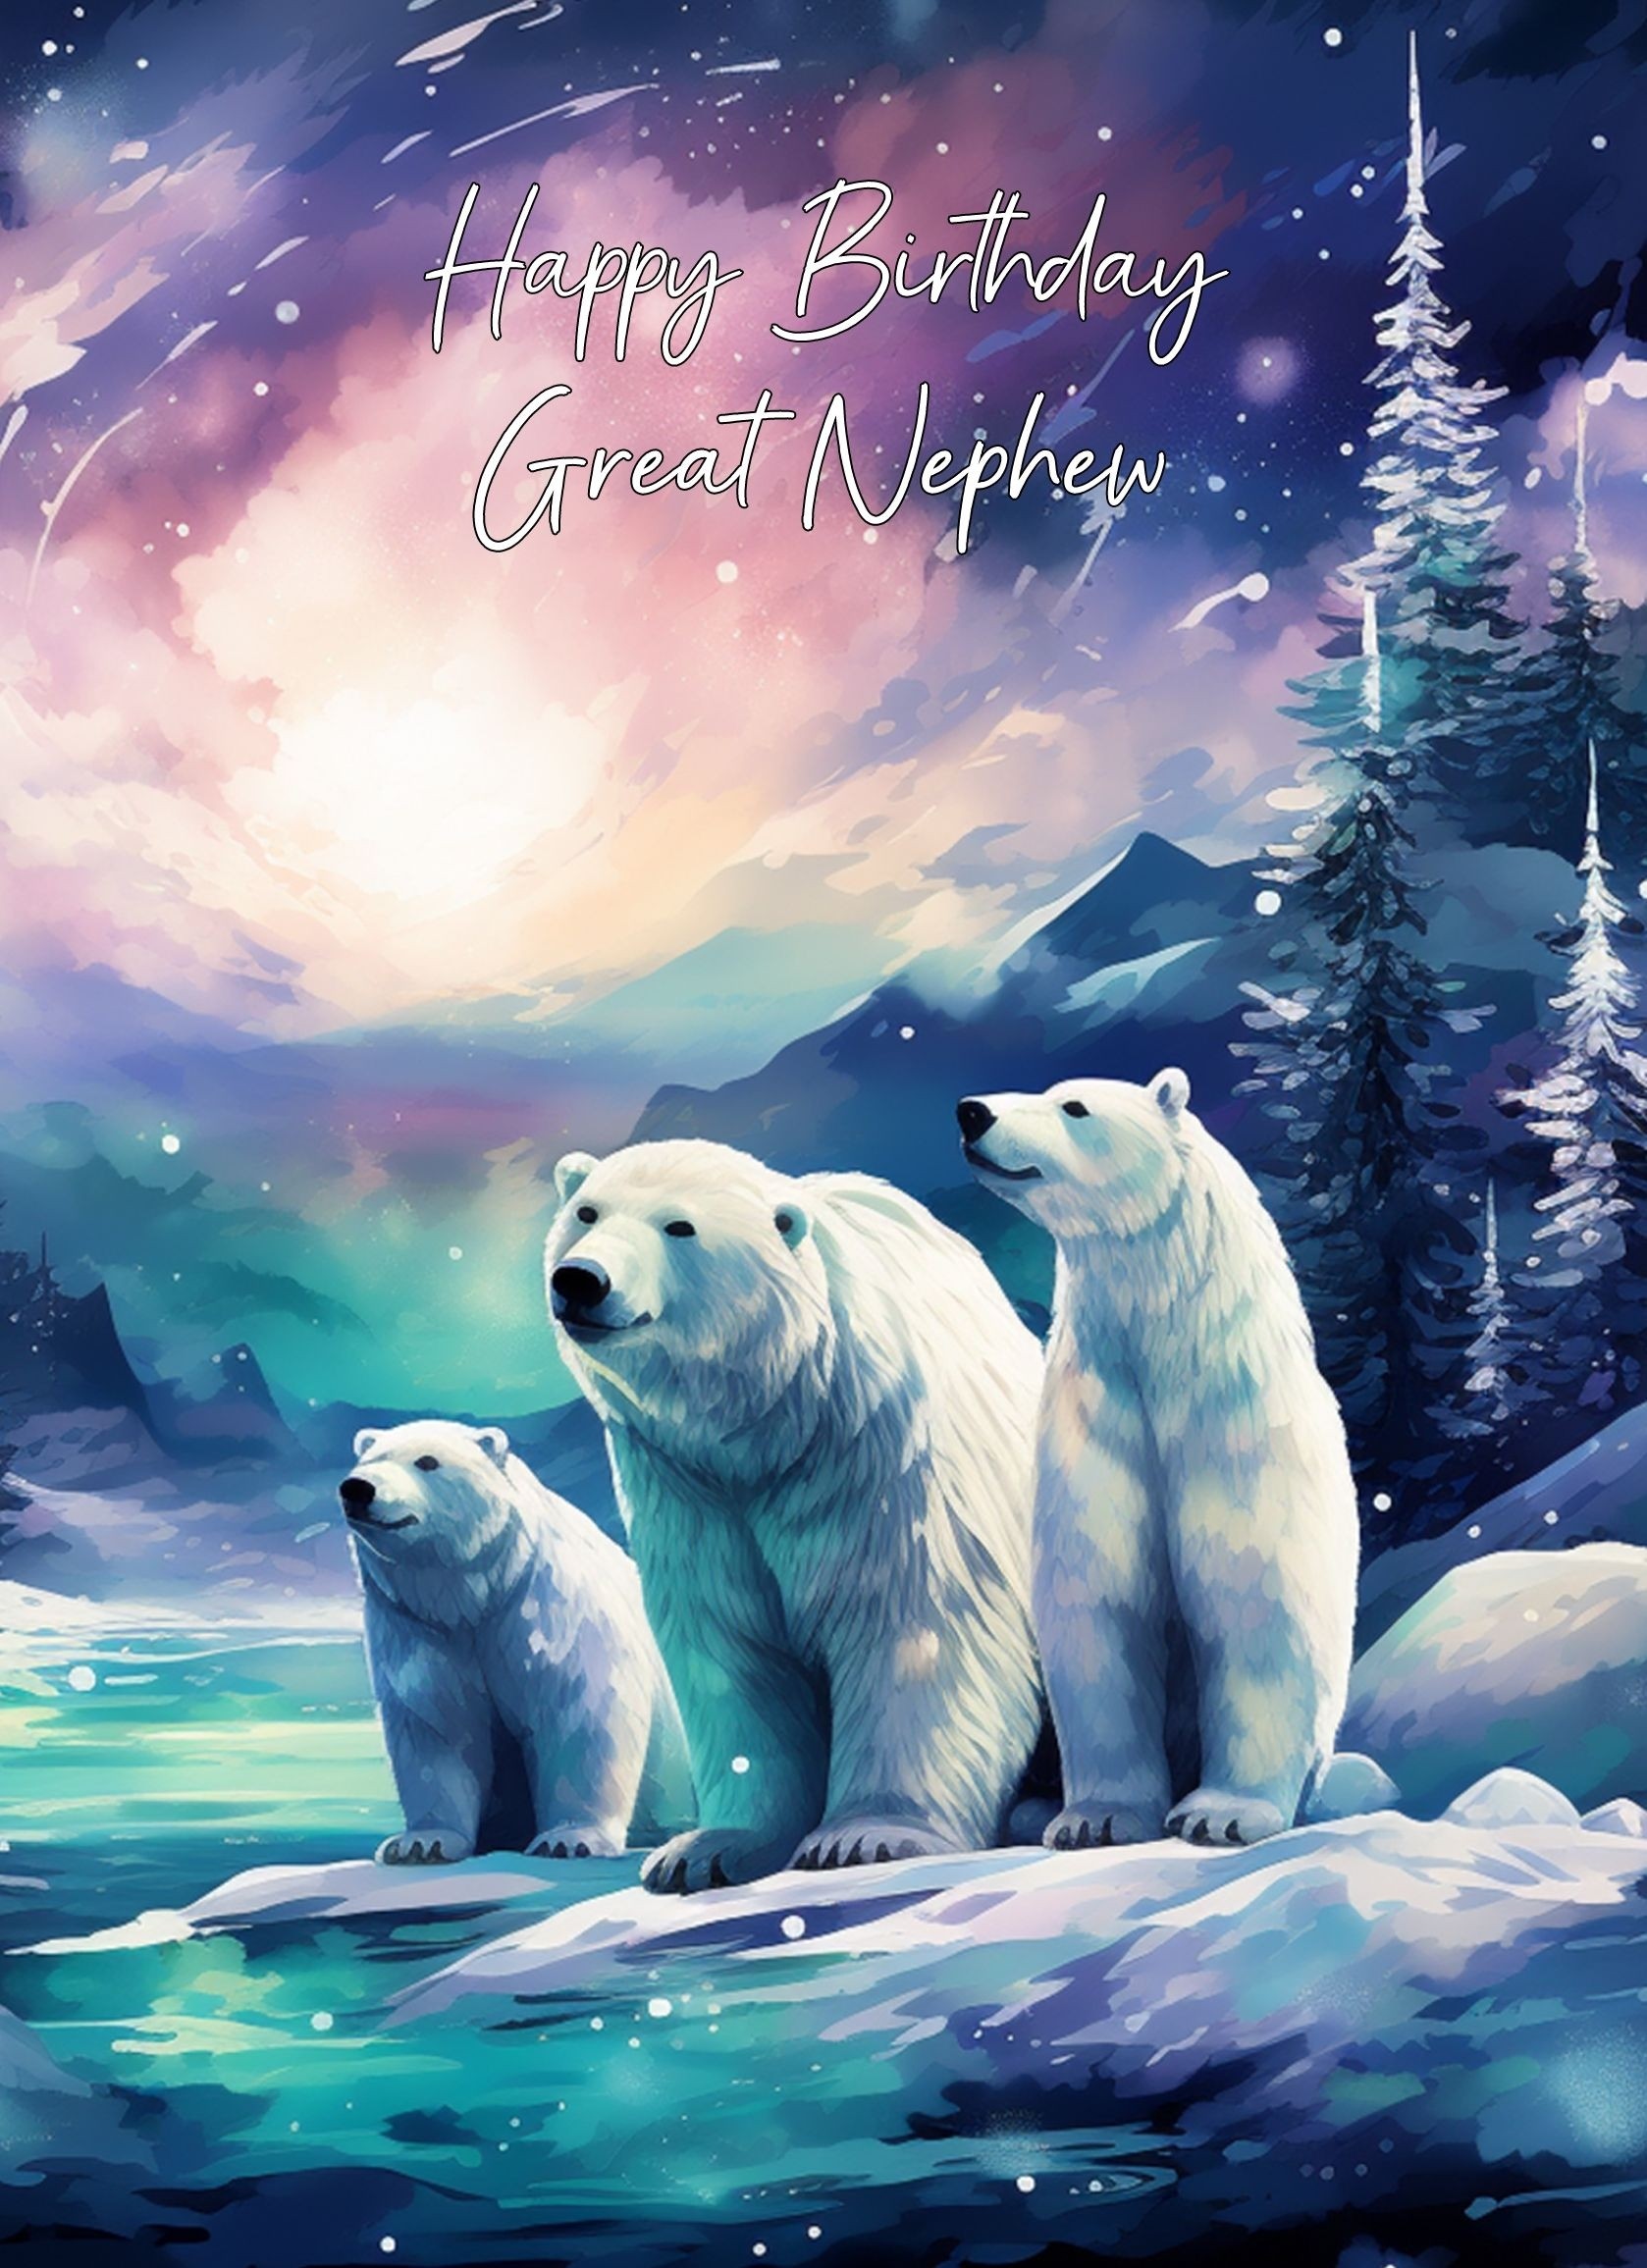 Polar Bear Art Birthday Card For Great Nephew (Design 1)